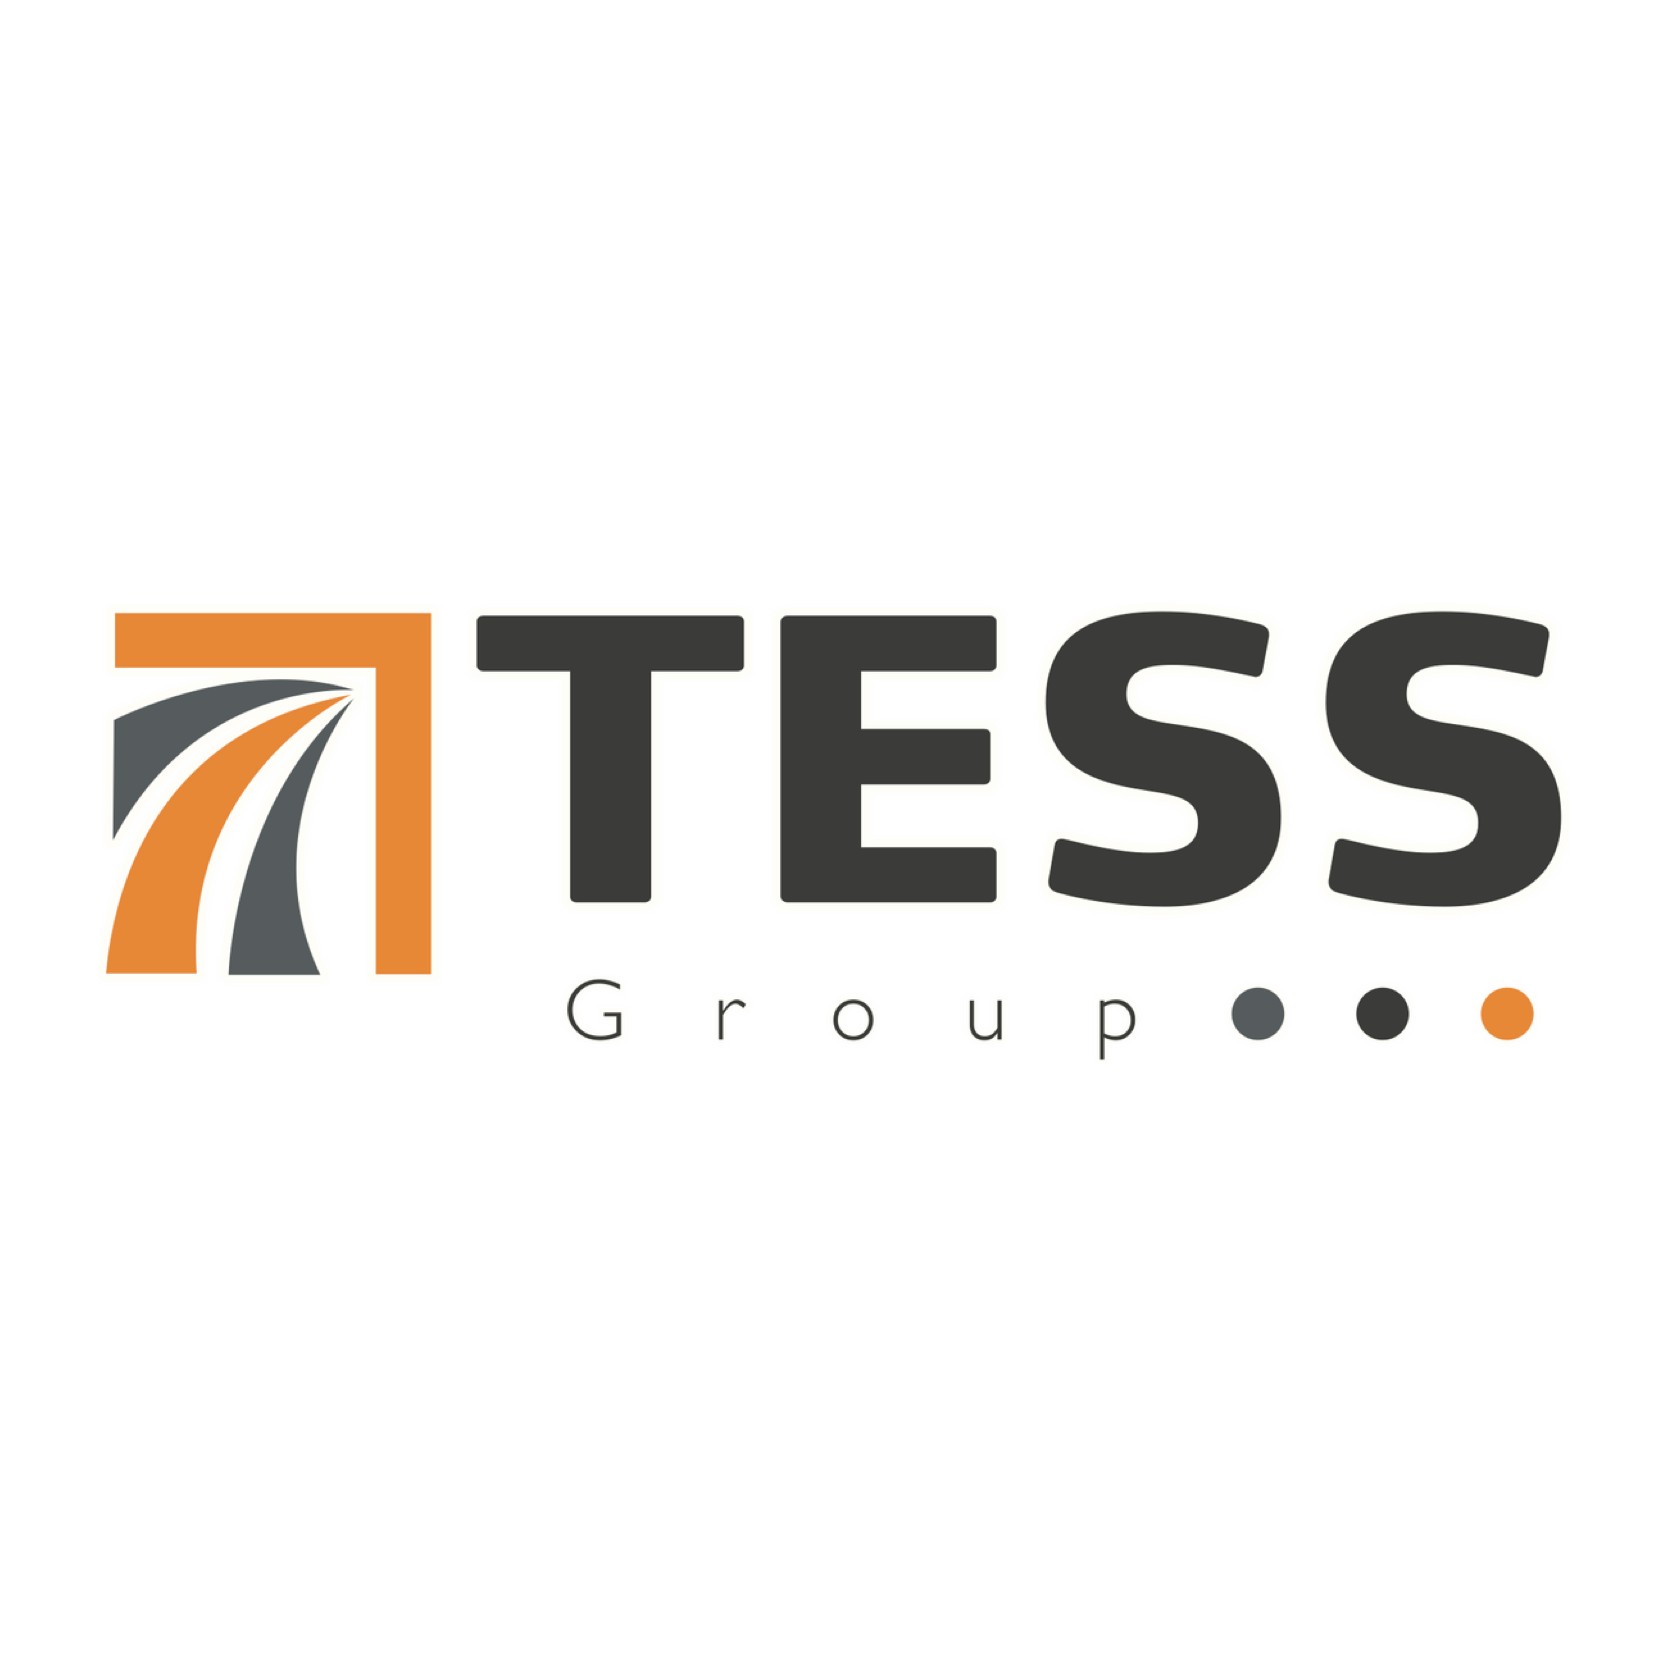 The Tess Group